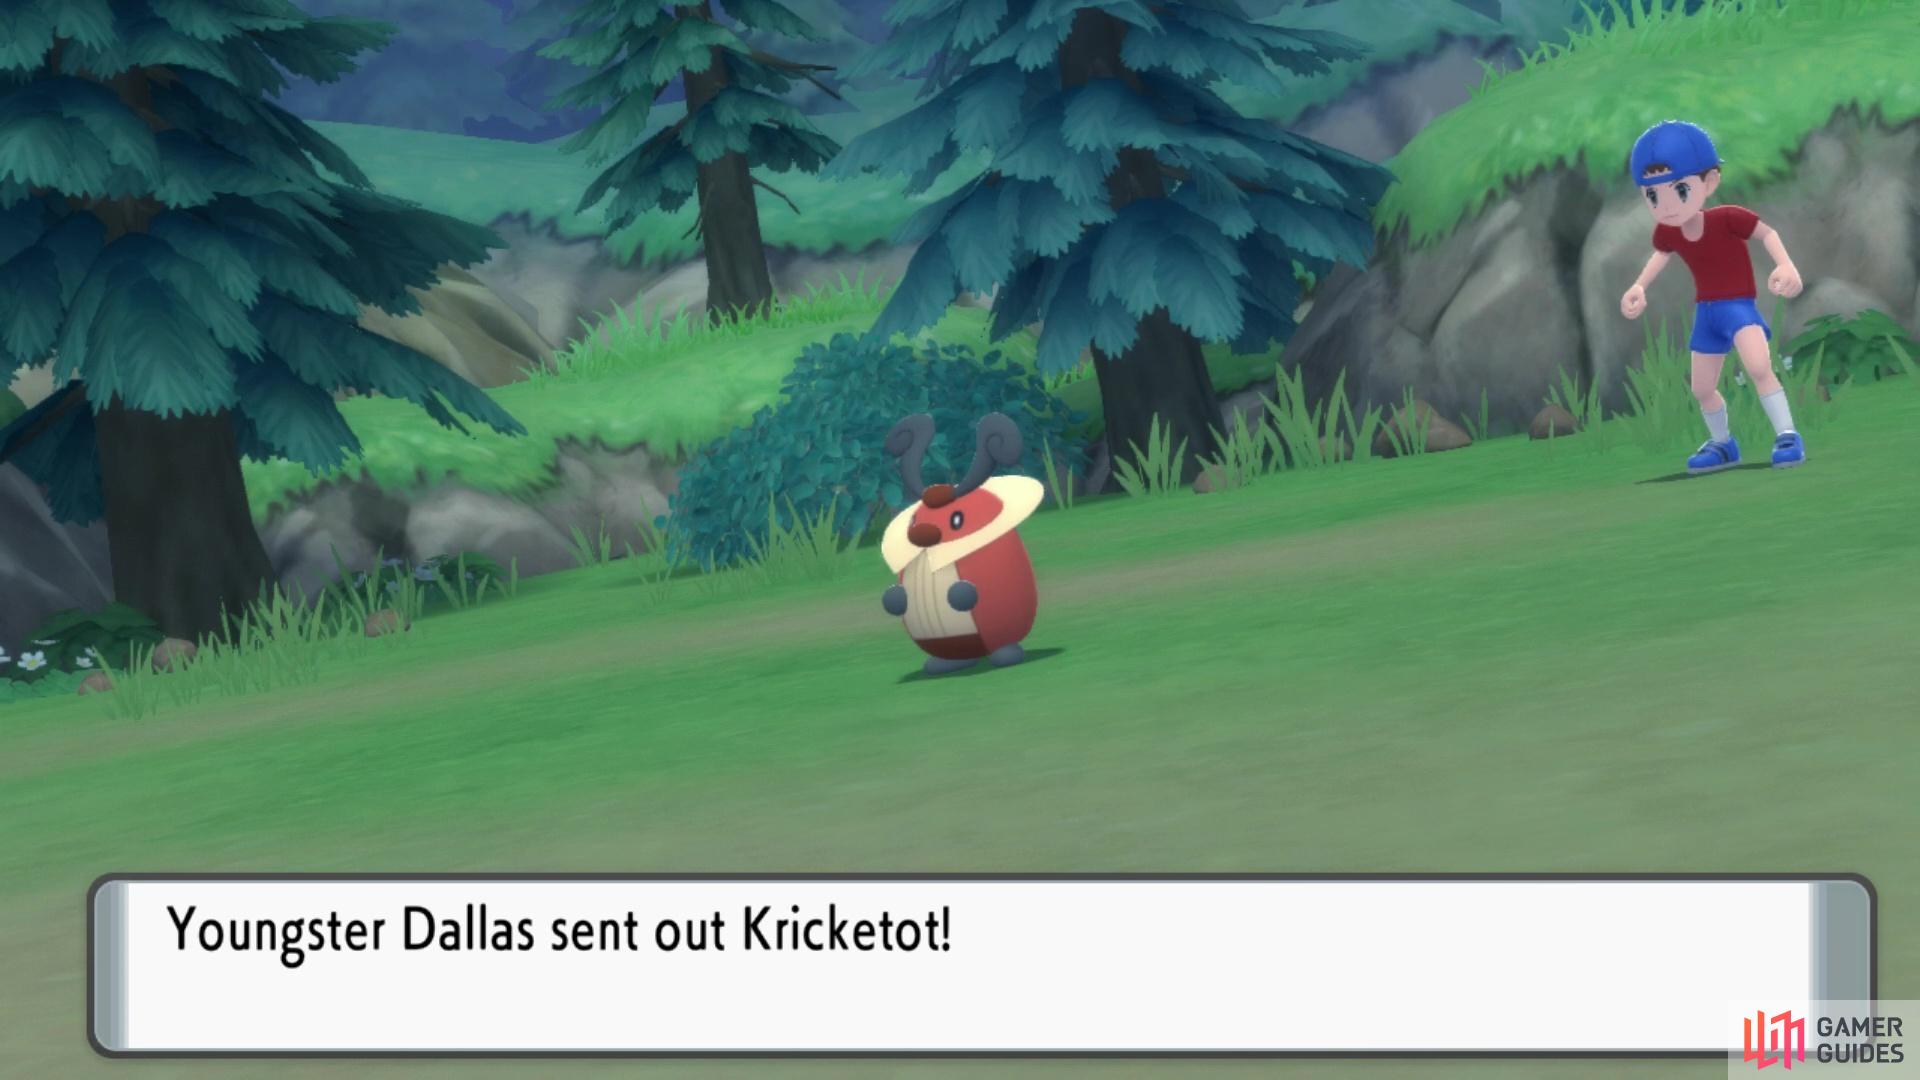 Youngster Dallas has a Kricketot.